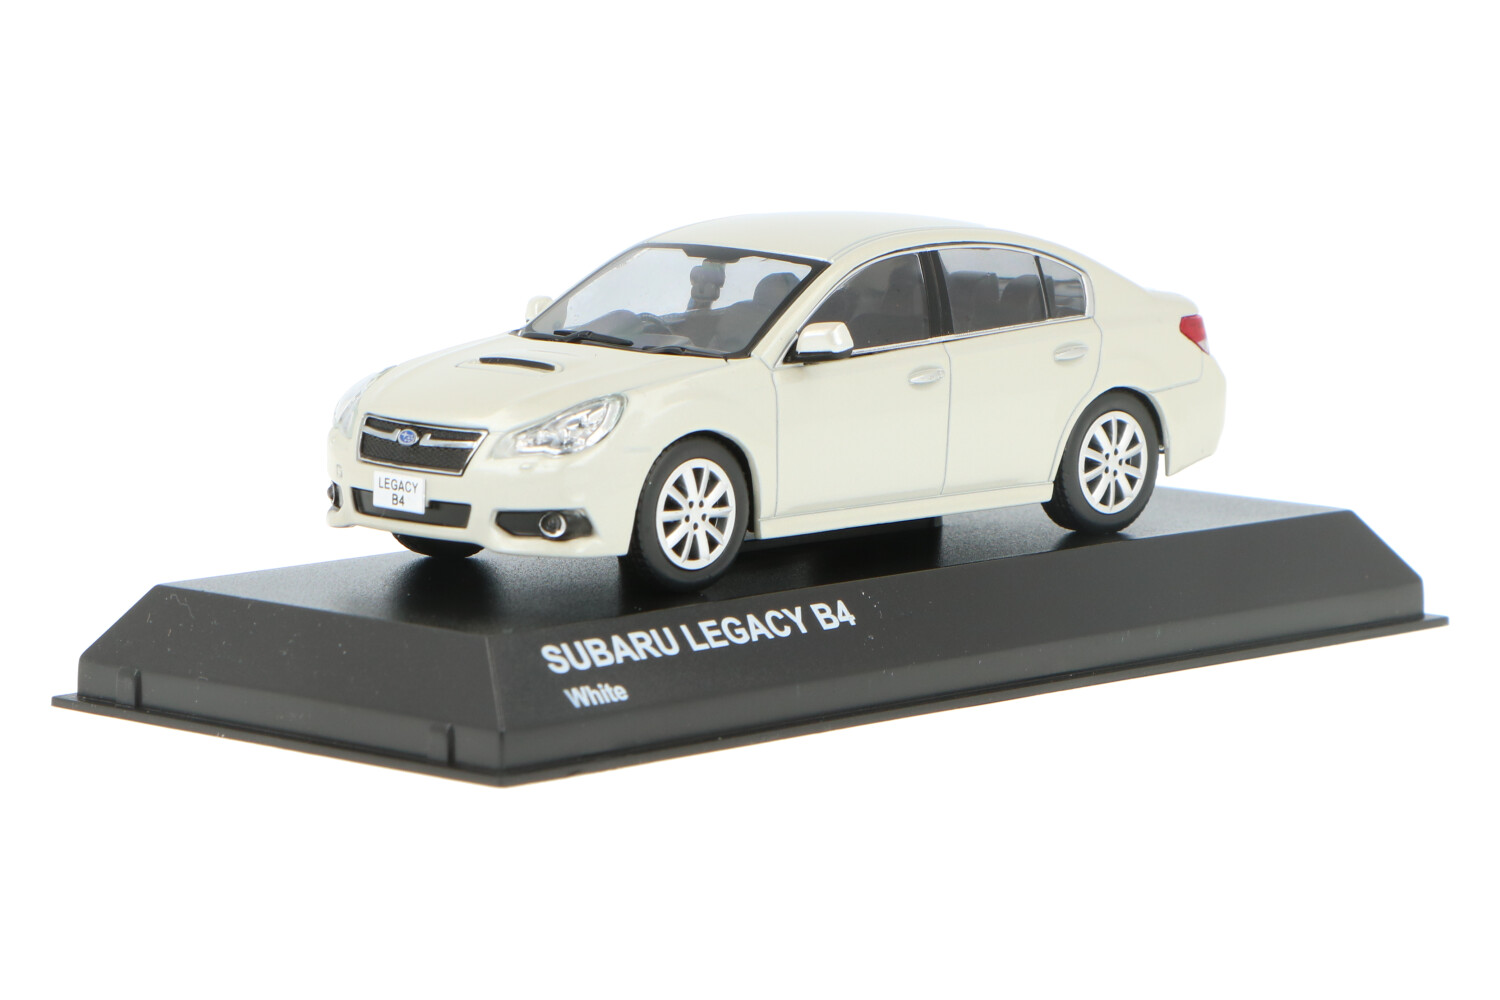 Subaru Legacy B4 - Modelauto schaal 1:43